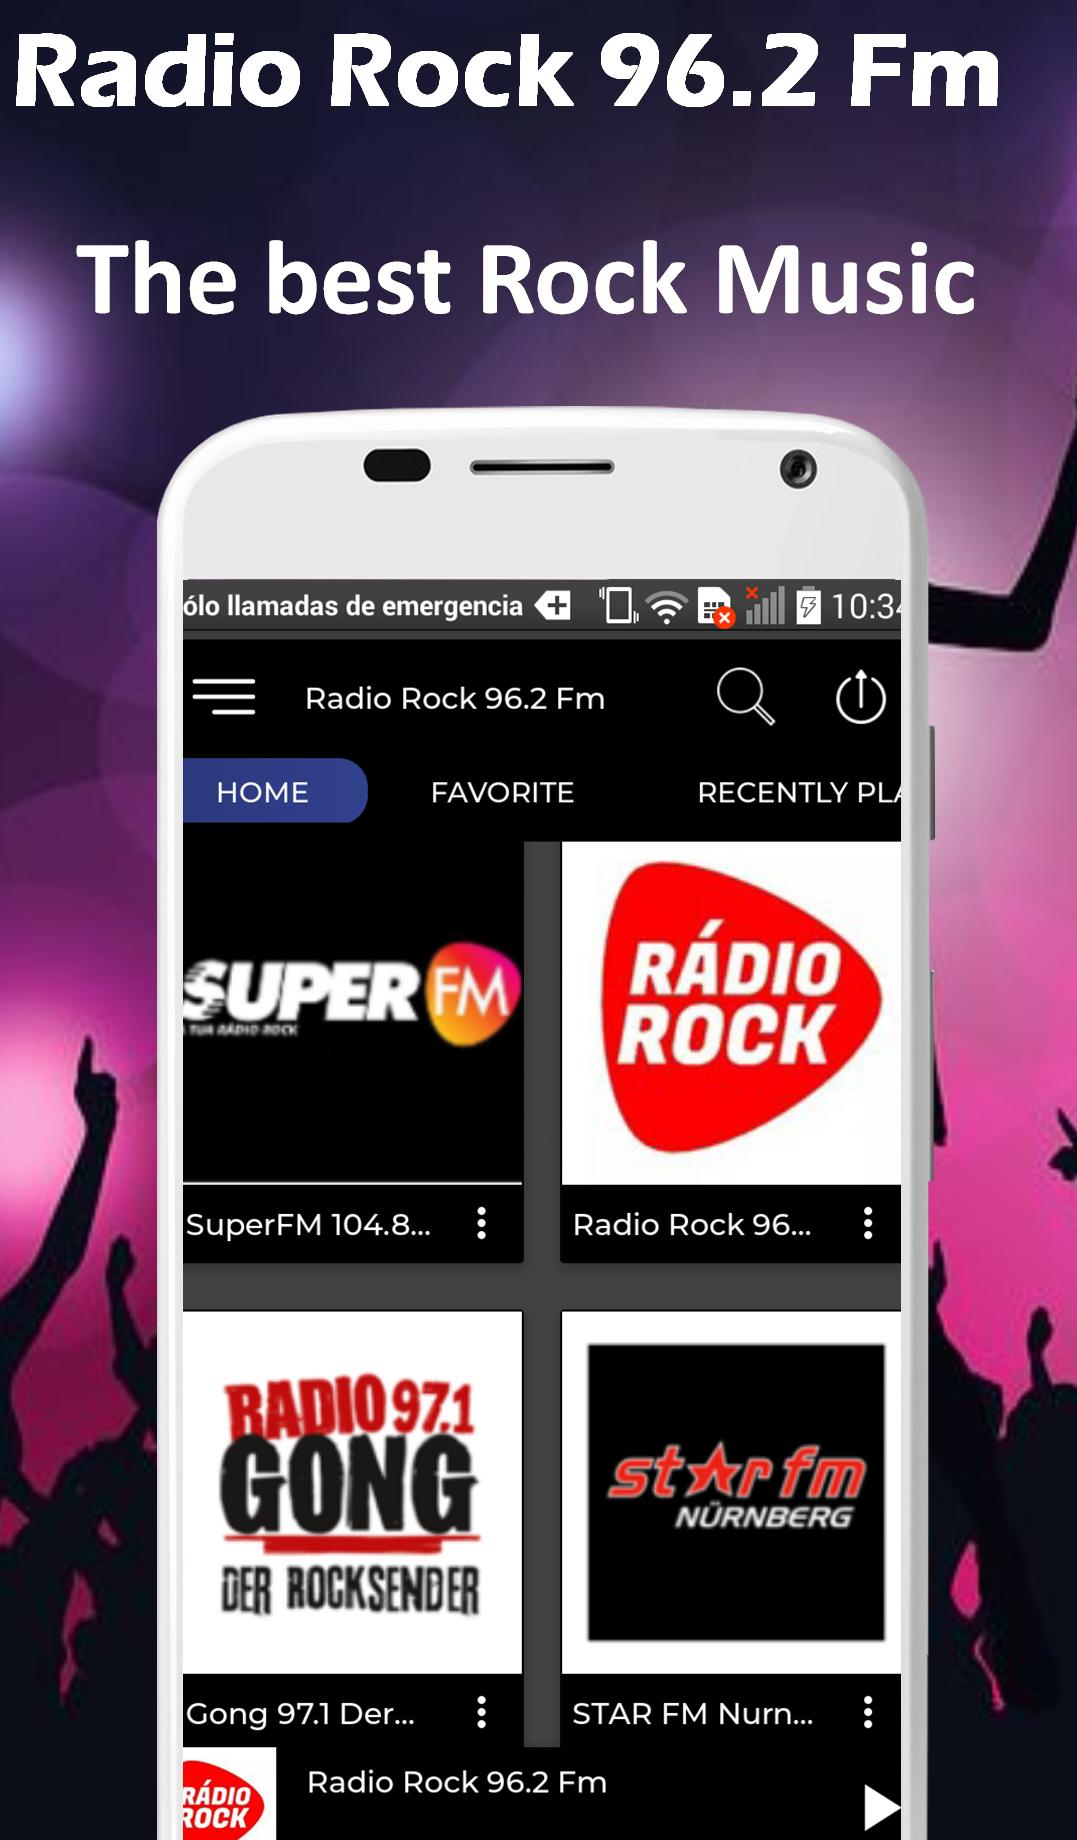 Radio Rock 96.2 Fm Lisboa + Rock Radio Stations for Android - APK Download